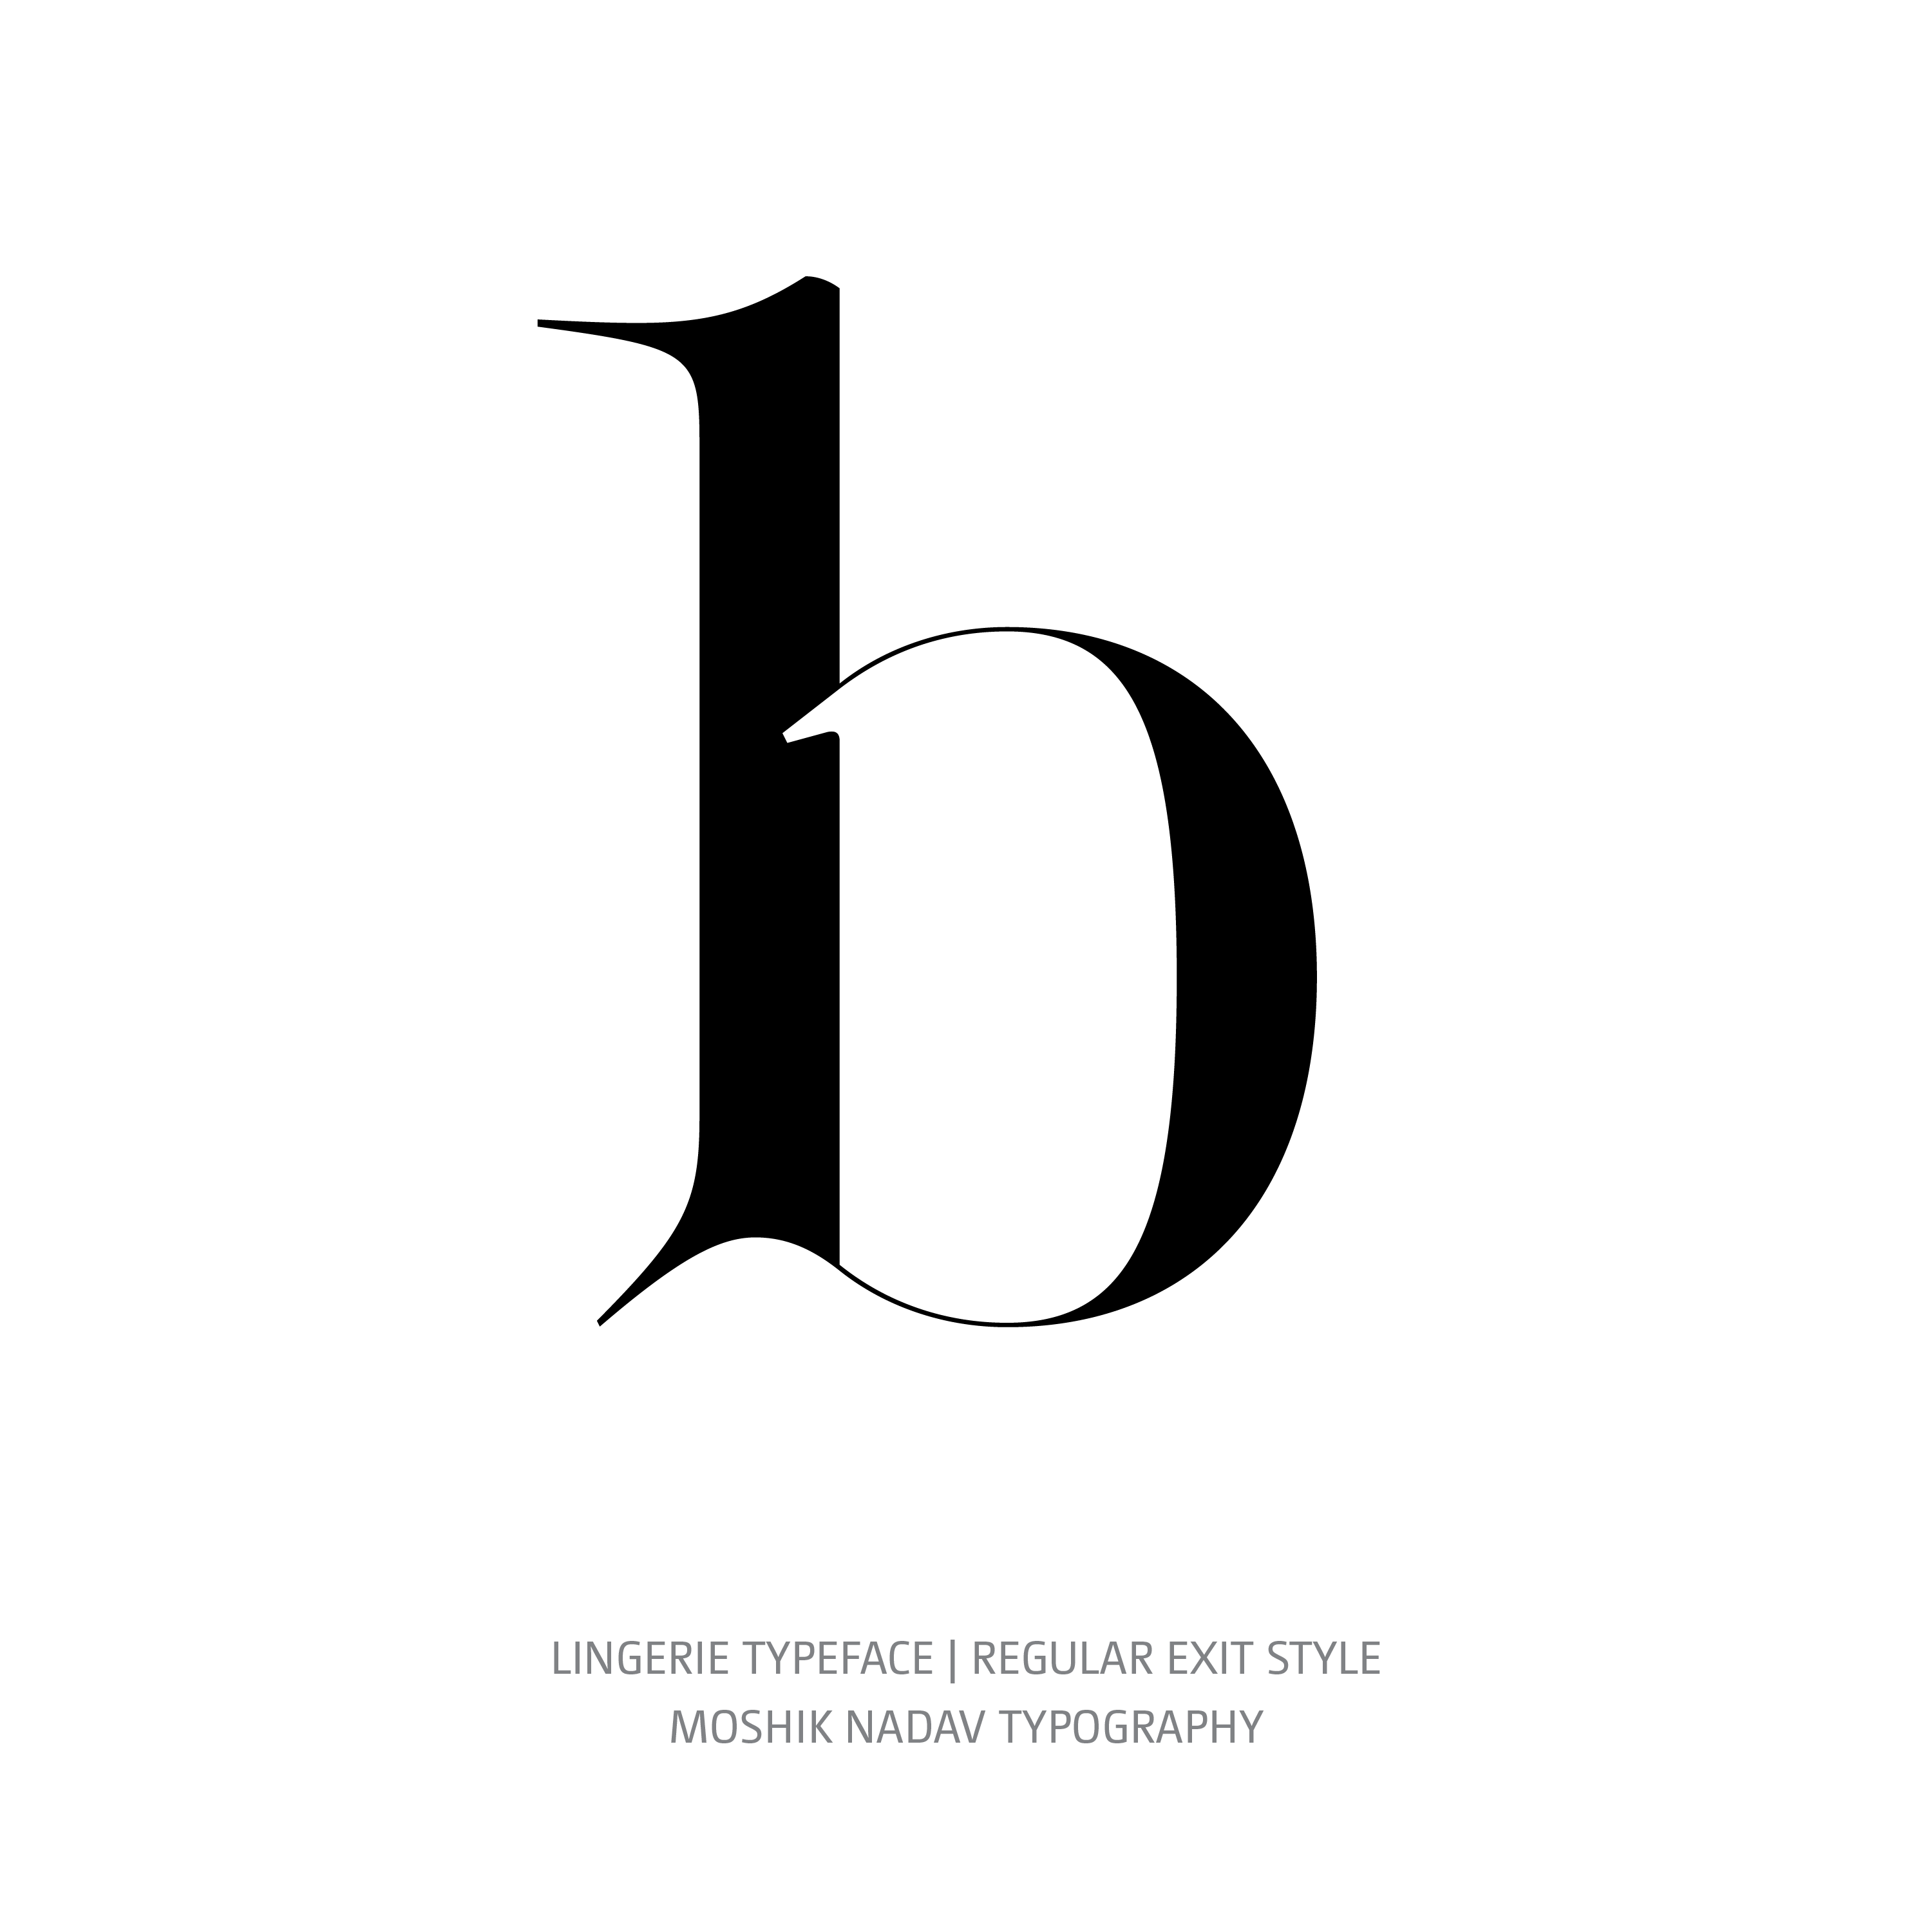 Lingerie Typeface Regular Exit b